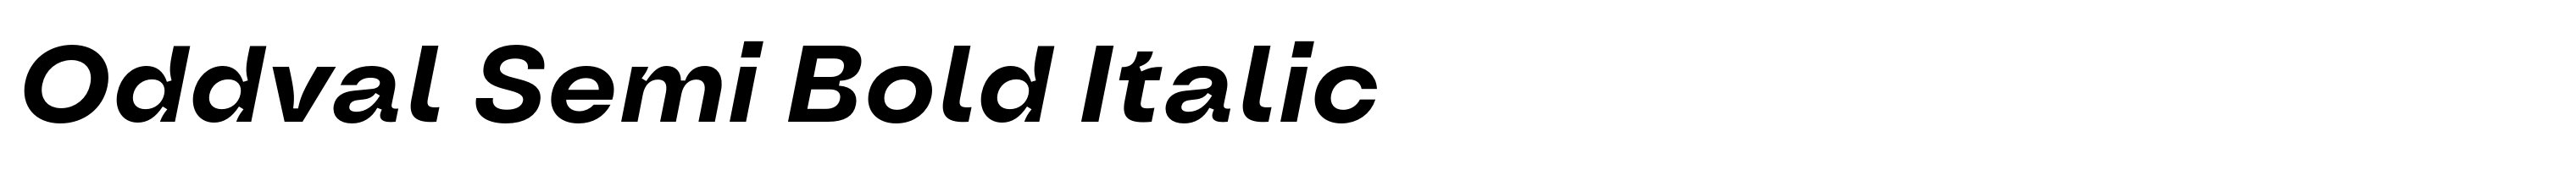 Oddval Semi Bold Italic